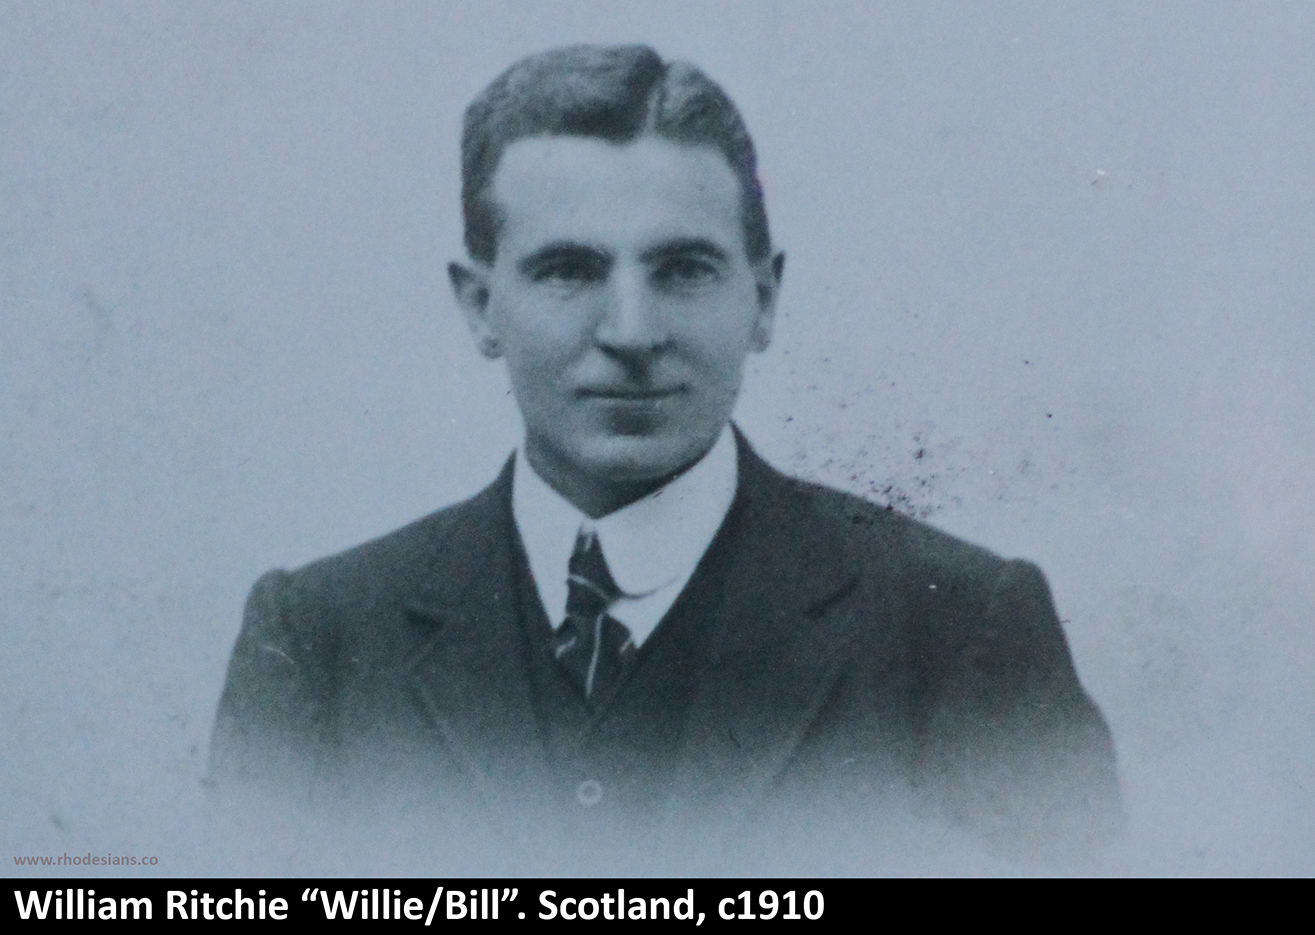 Portrait of William Ritchie in Scotland in 1910